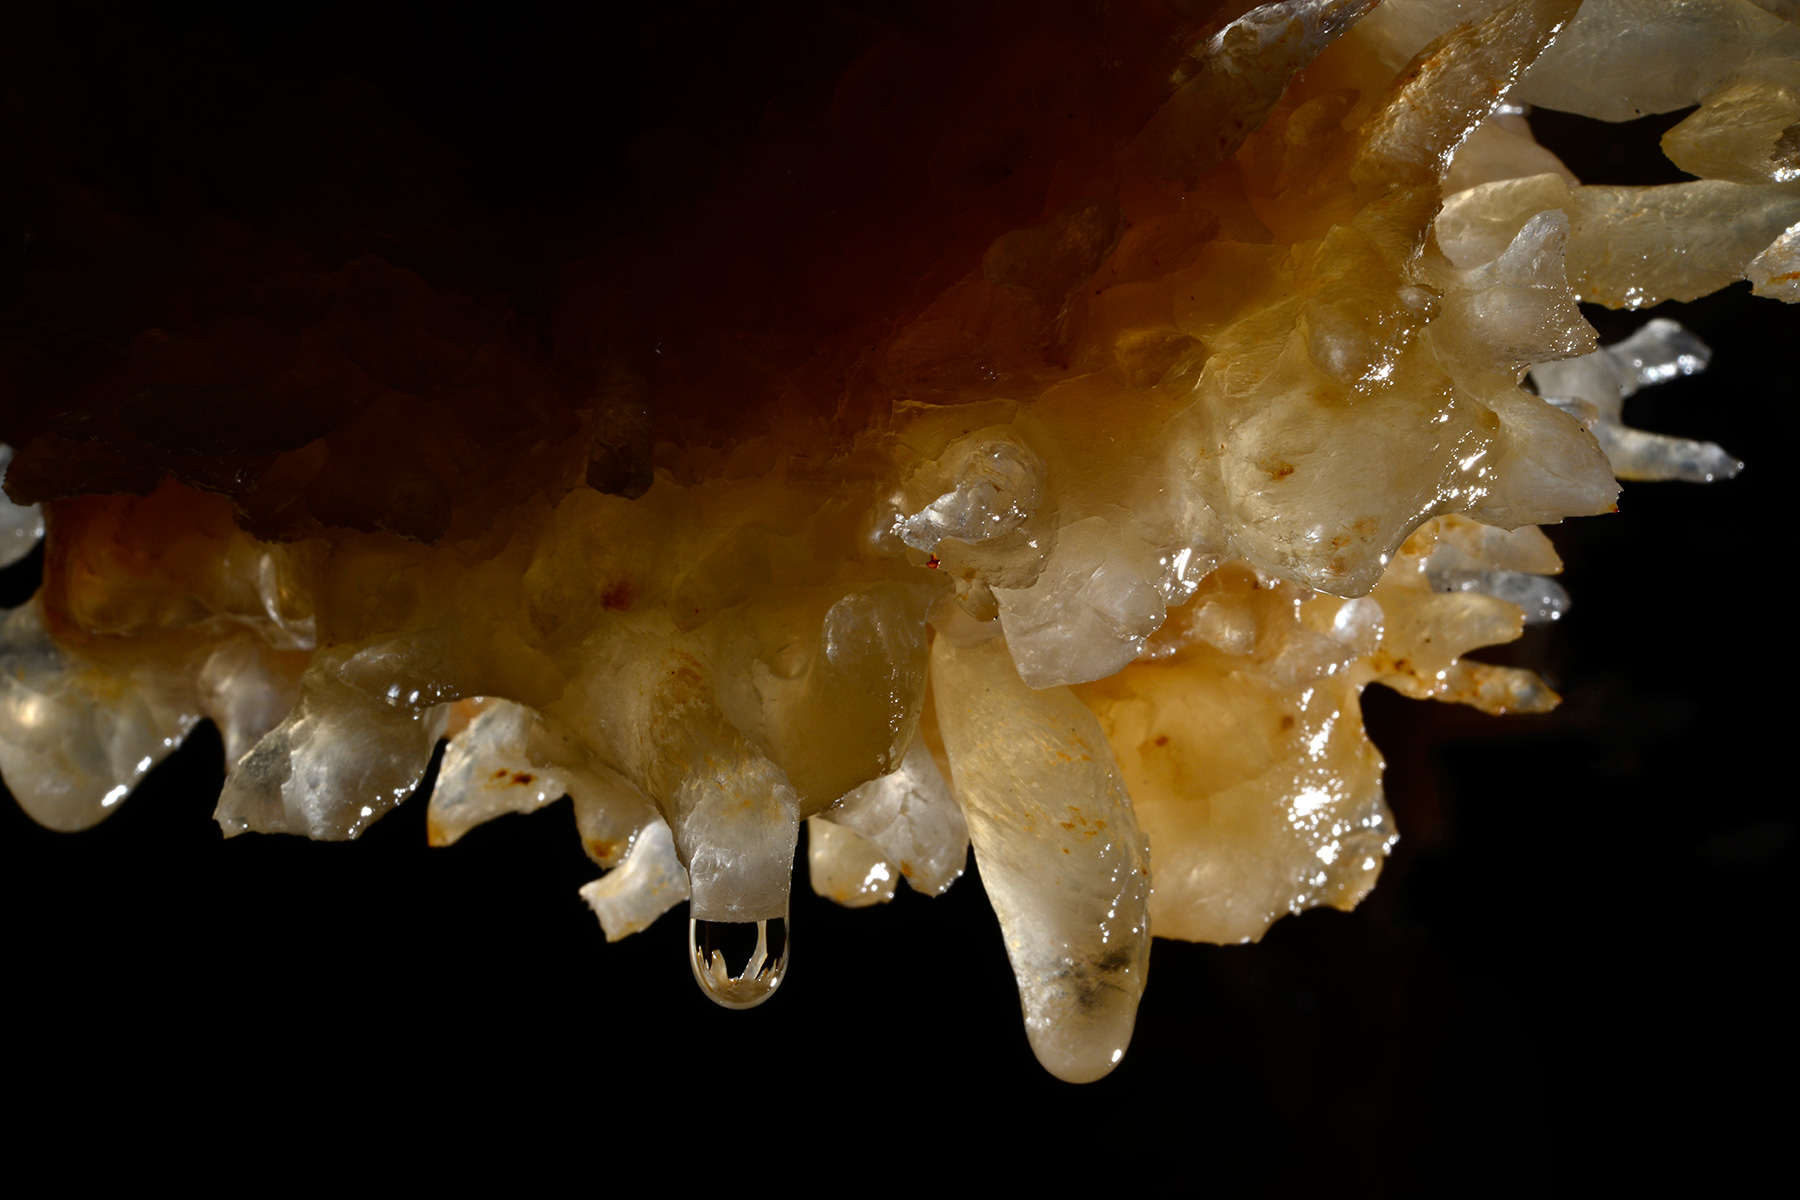 Grotta Impossibile (région de Trieste, Italie) - Cristaux de calcite jaune